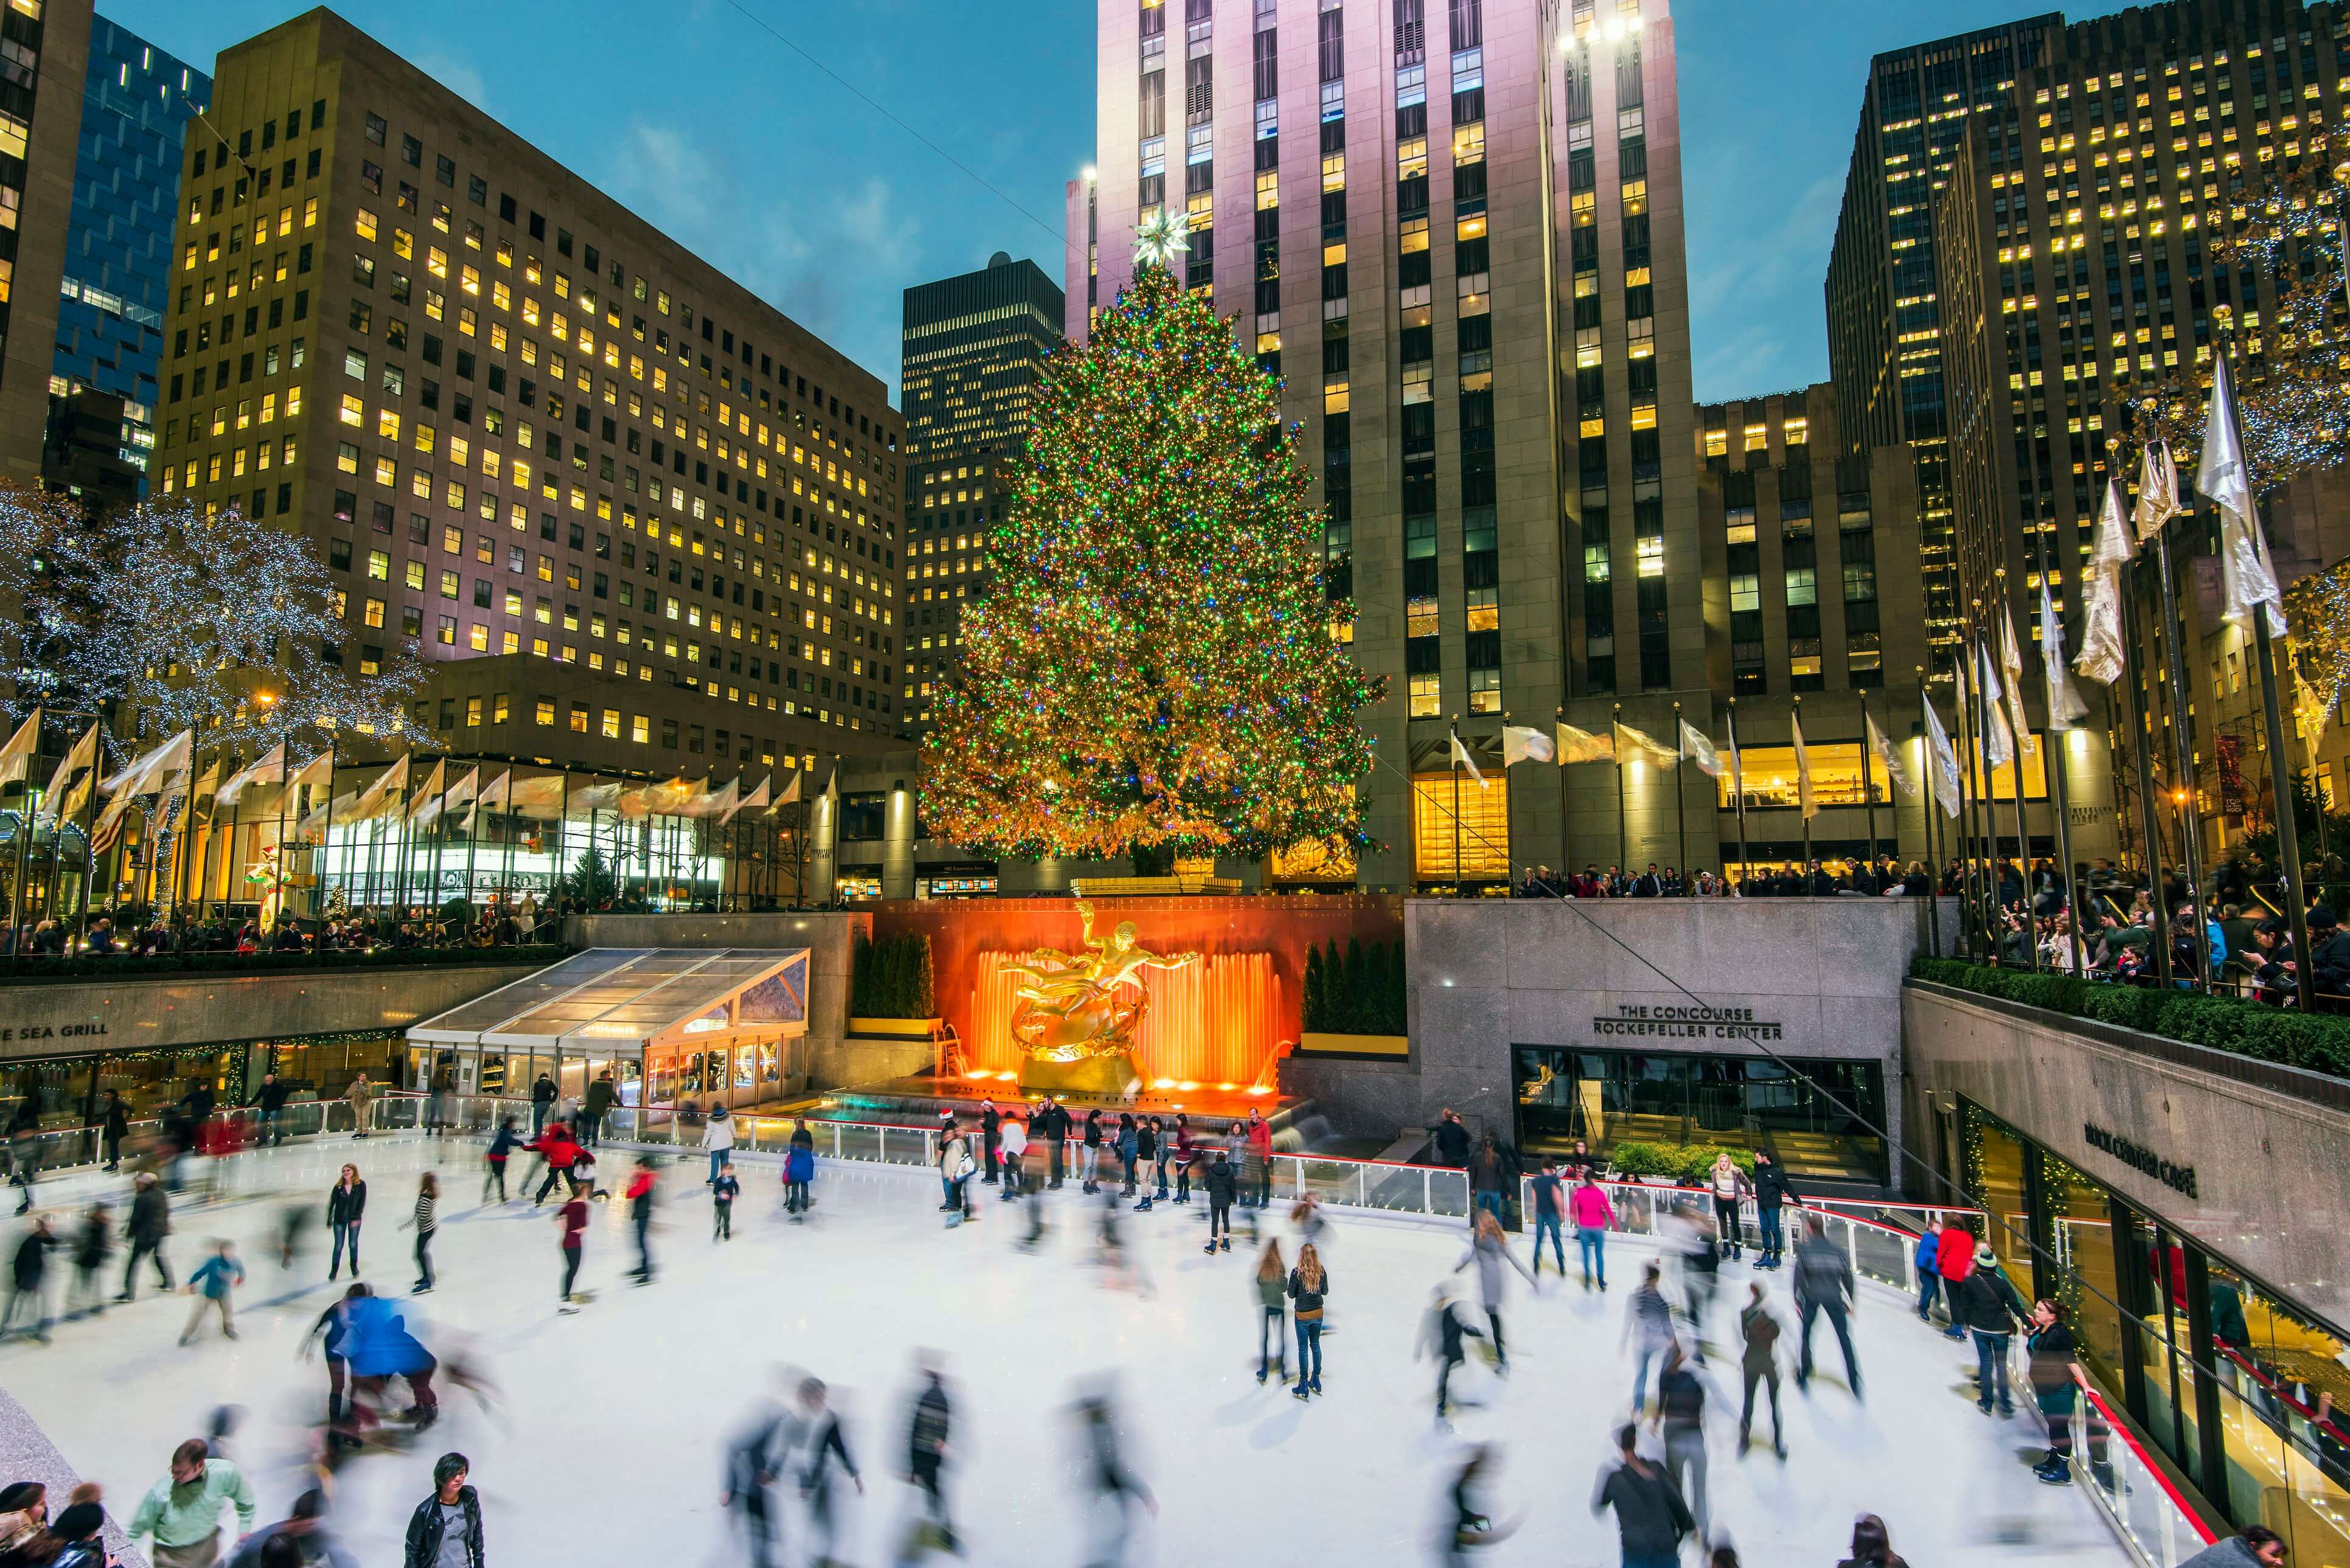 Ice skating rinks in New York City for Winter 2017 | Eyeflare.com